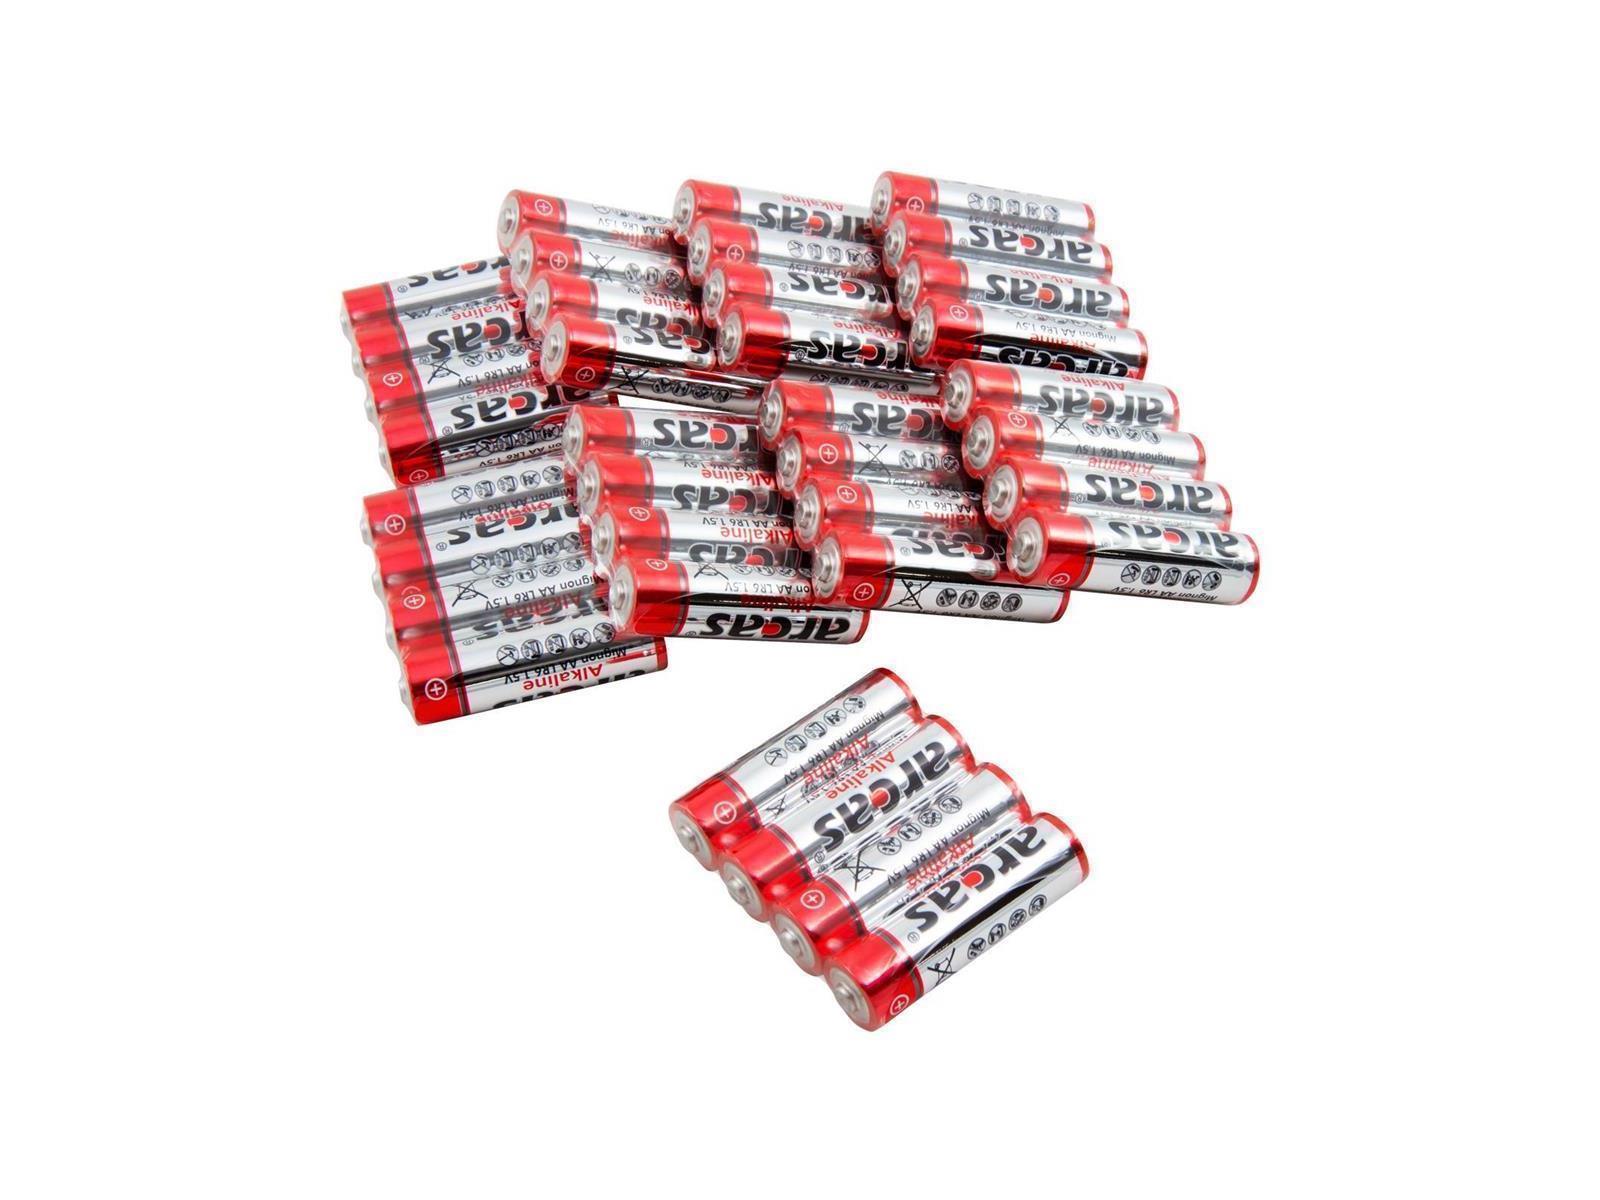 Mignon-Batterie Alkaline 1,5V, Typ AA/LR06, 32+4 Pack